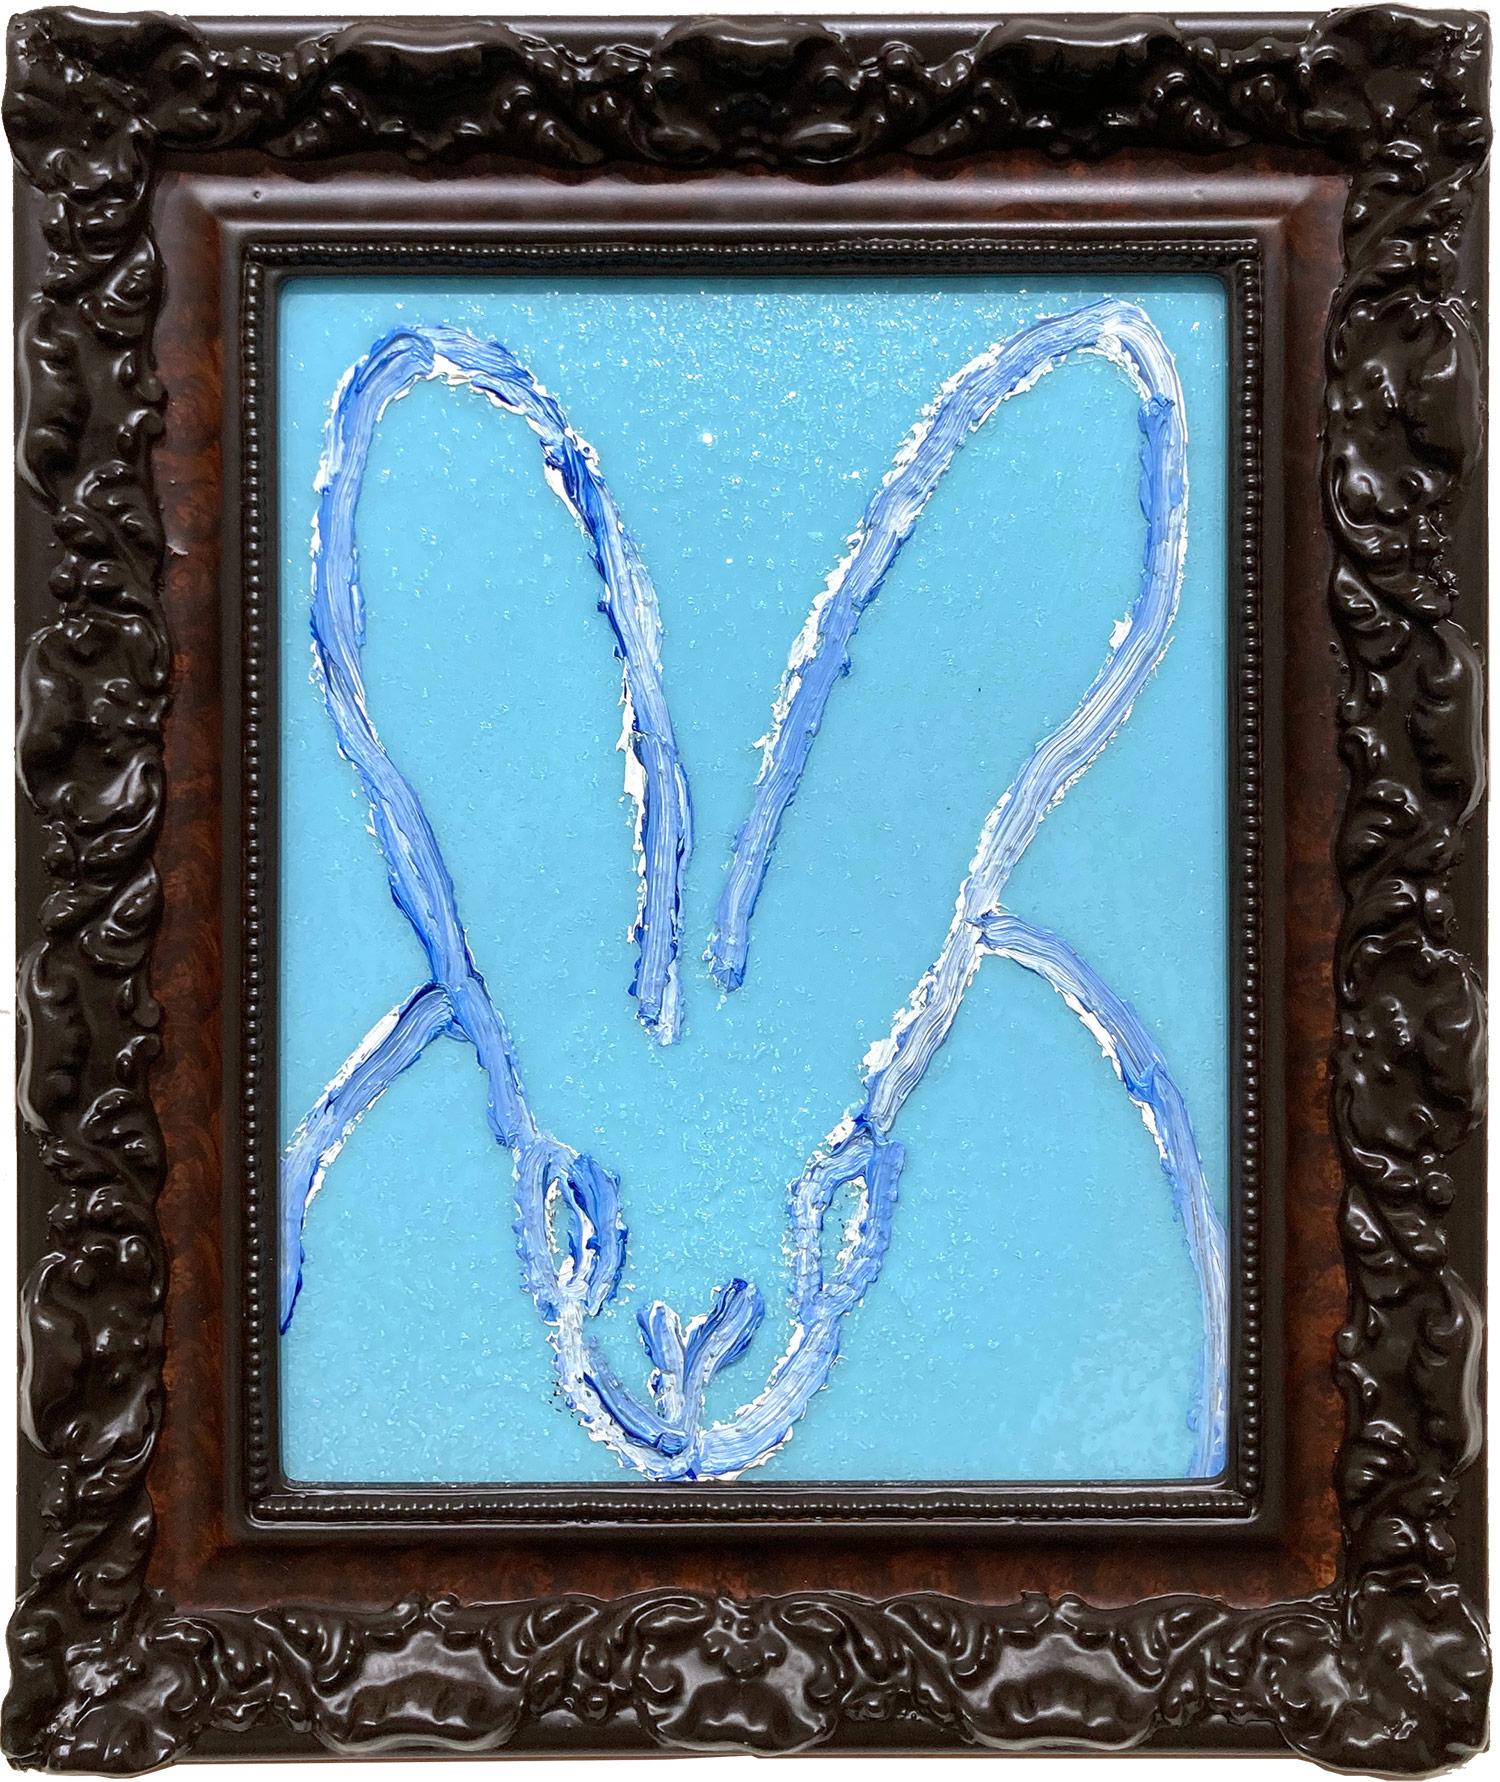 Hunt Slonem Animal Painting - "Aquamarine" White Outline Bunny on Aqua Blue Oil Painting & Diamond Dust